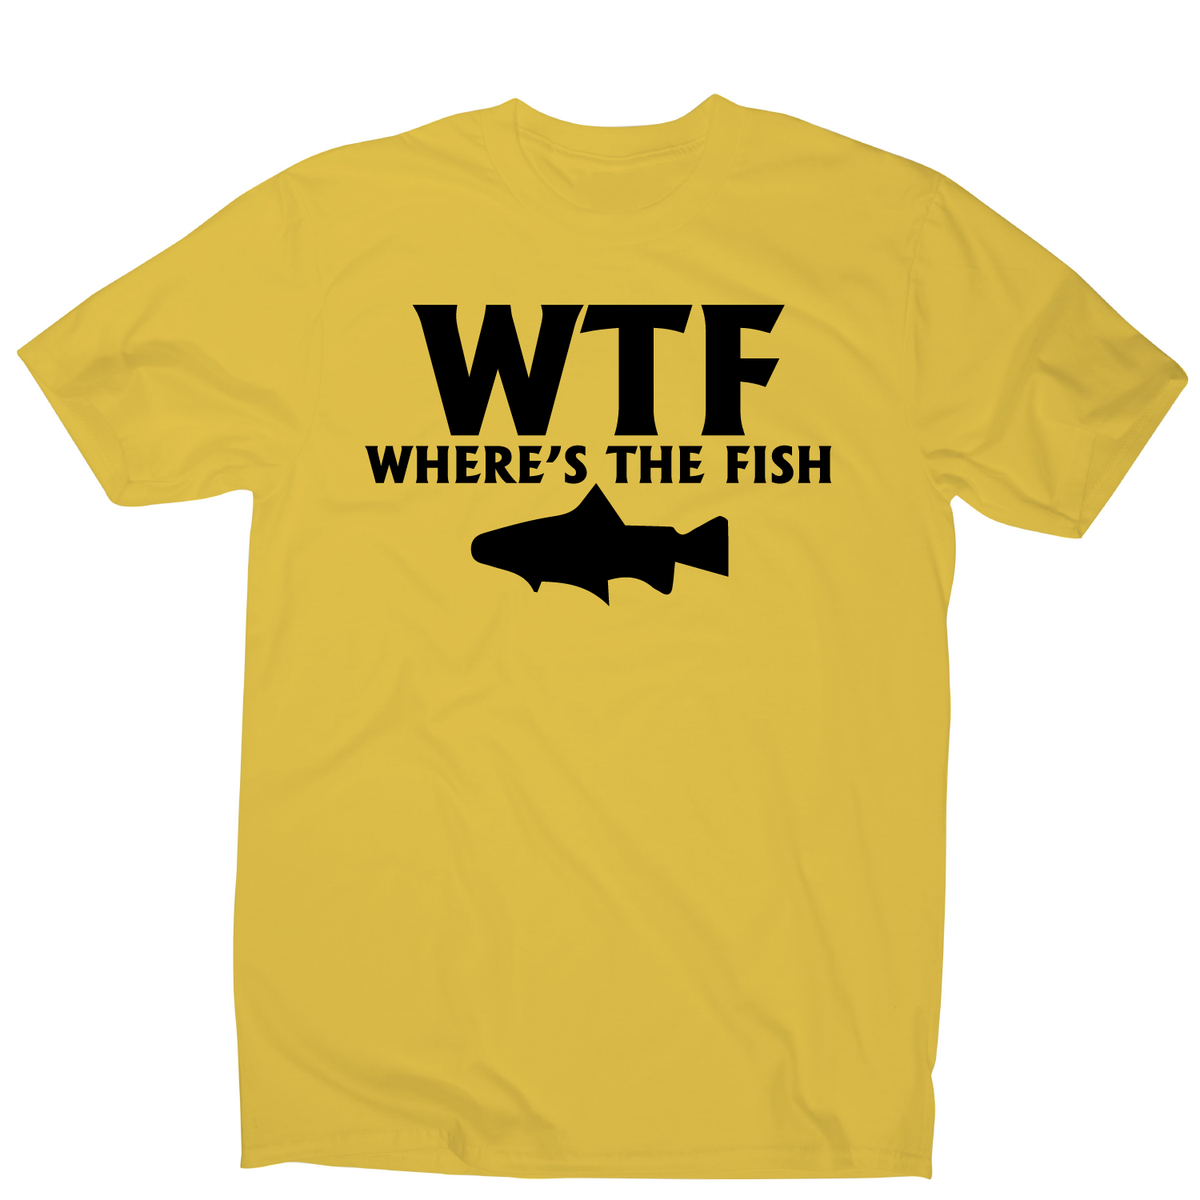 Funny fishing t-shirt mens  Wtf where's the fish slogan humour tee